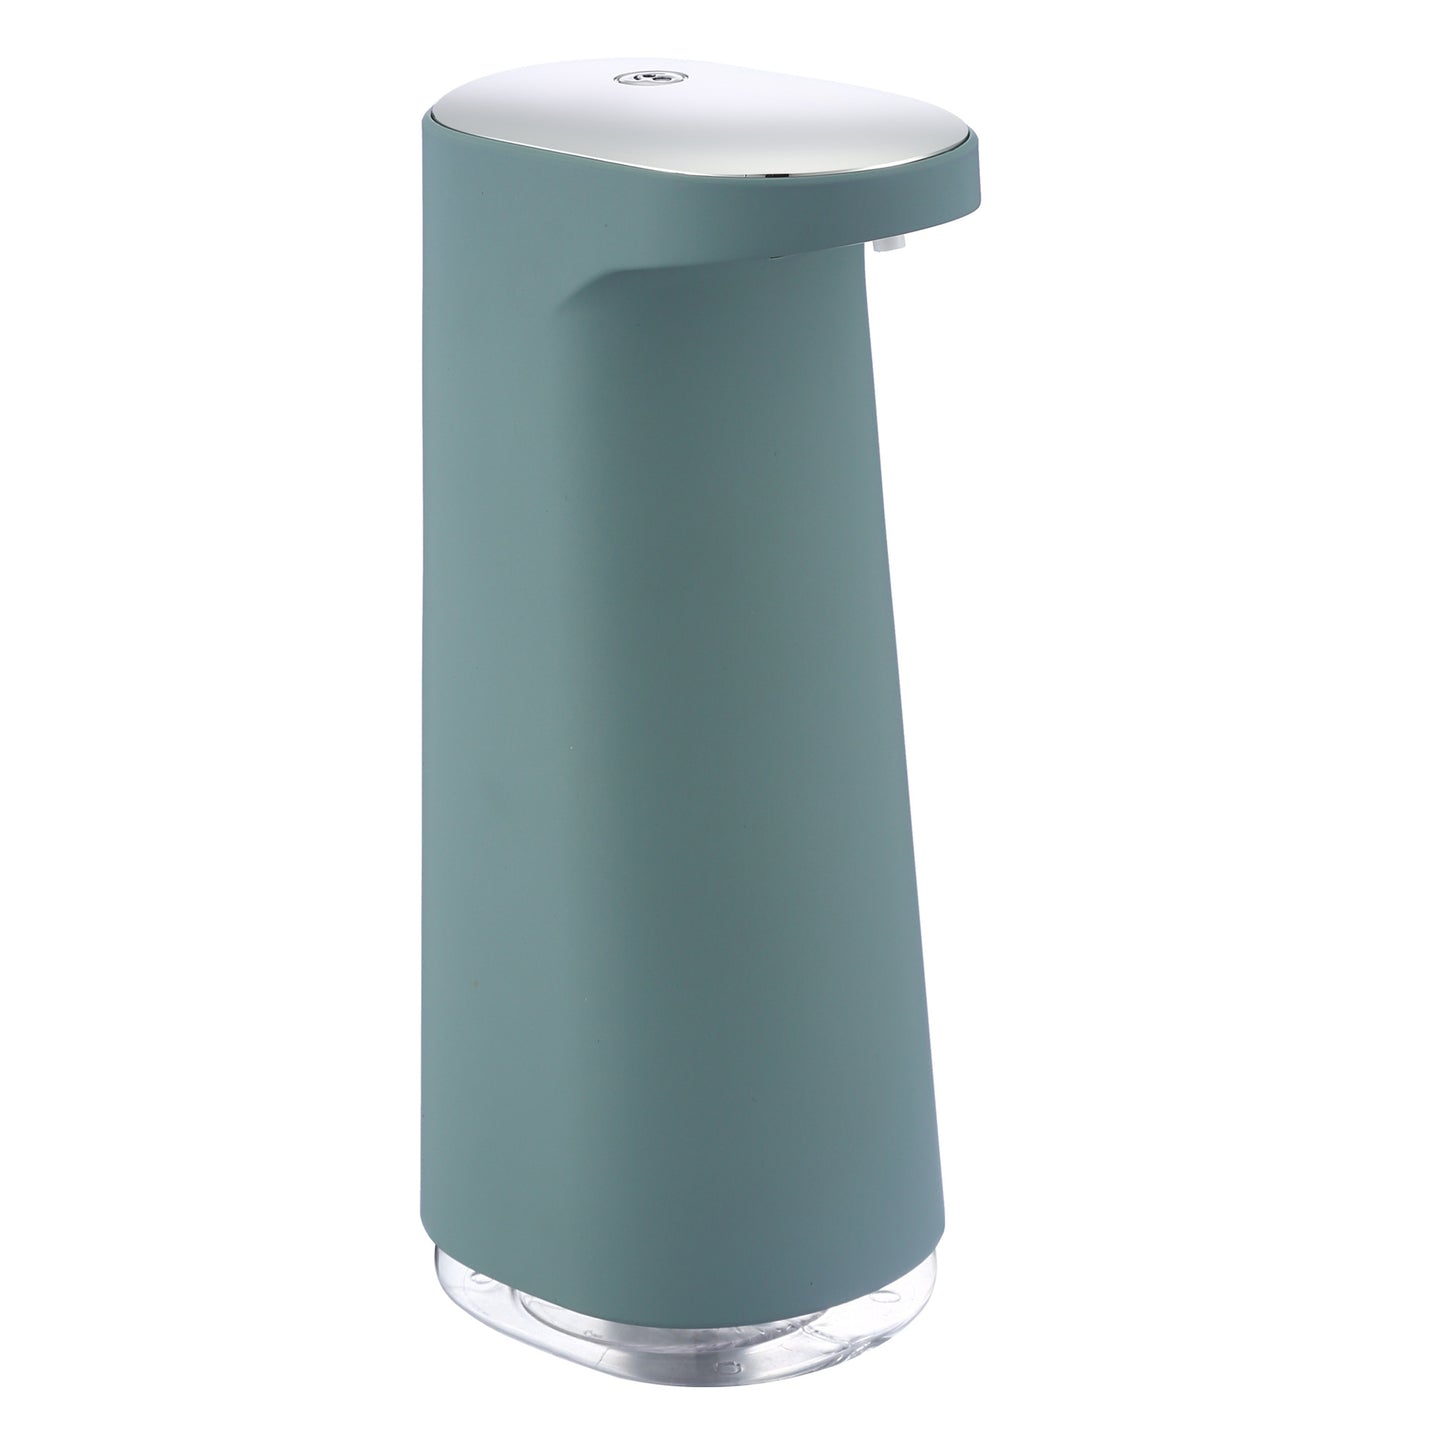 Foaming Soap Dispenser! Automatic Hand Sanitizer For Kitchen & Bathroom